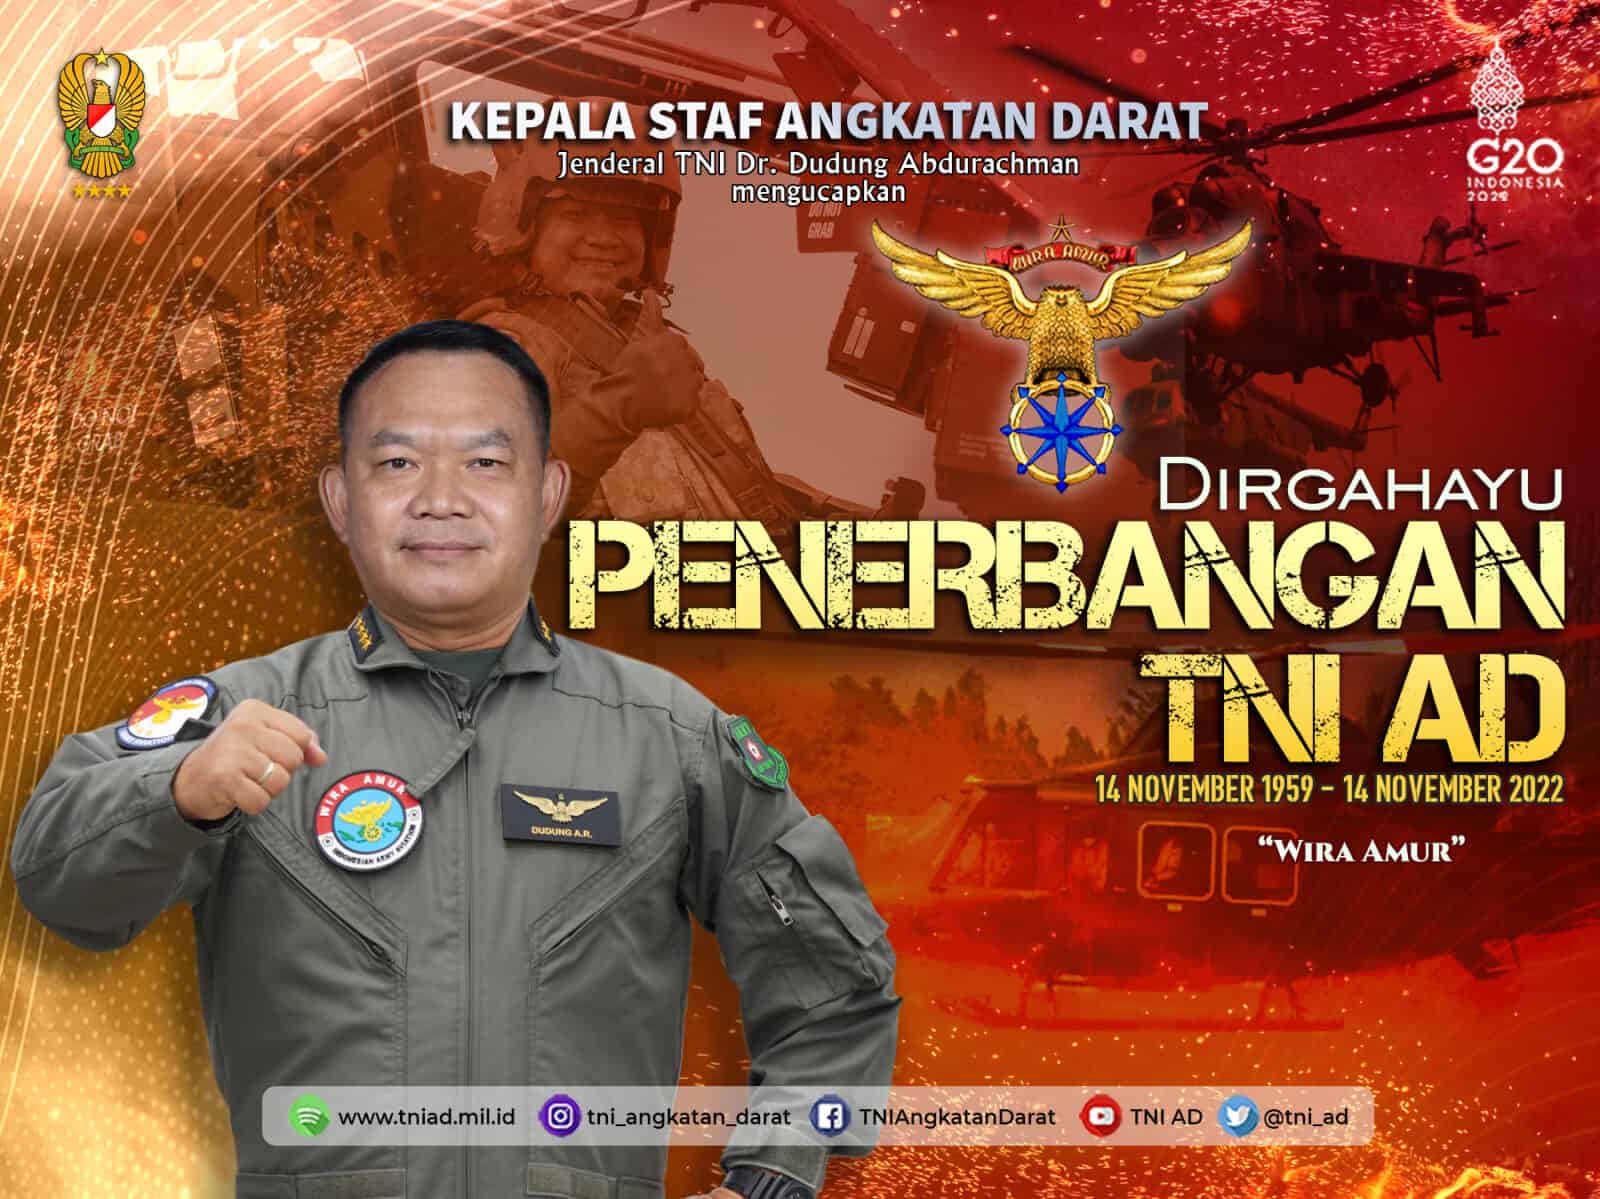 Dirgahayu Penerbangan TNI AD, 14 November 1959 – 14 November 2022 “Wira Amur”